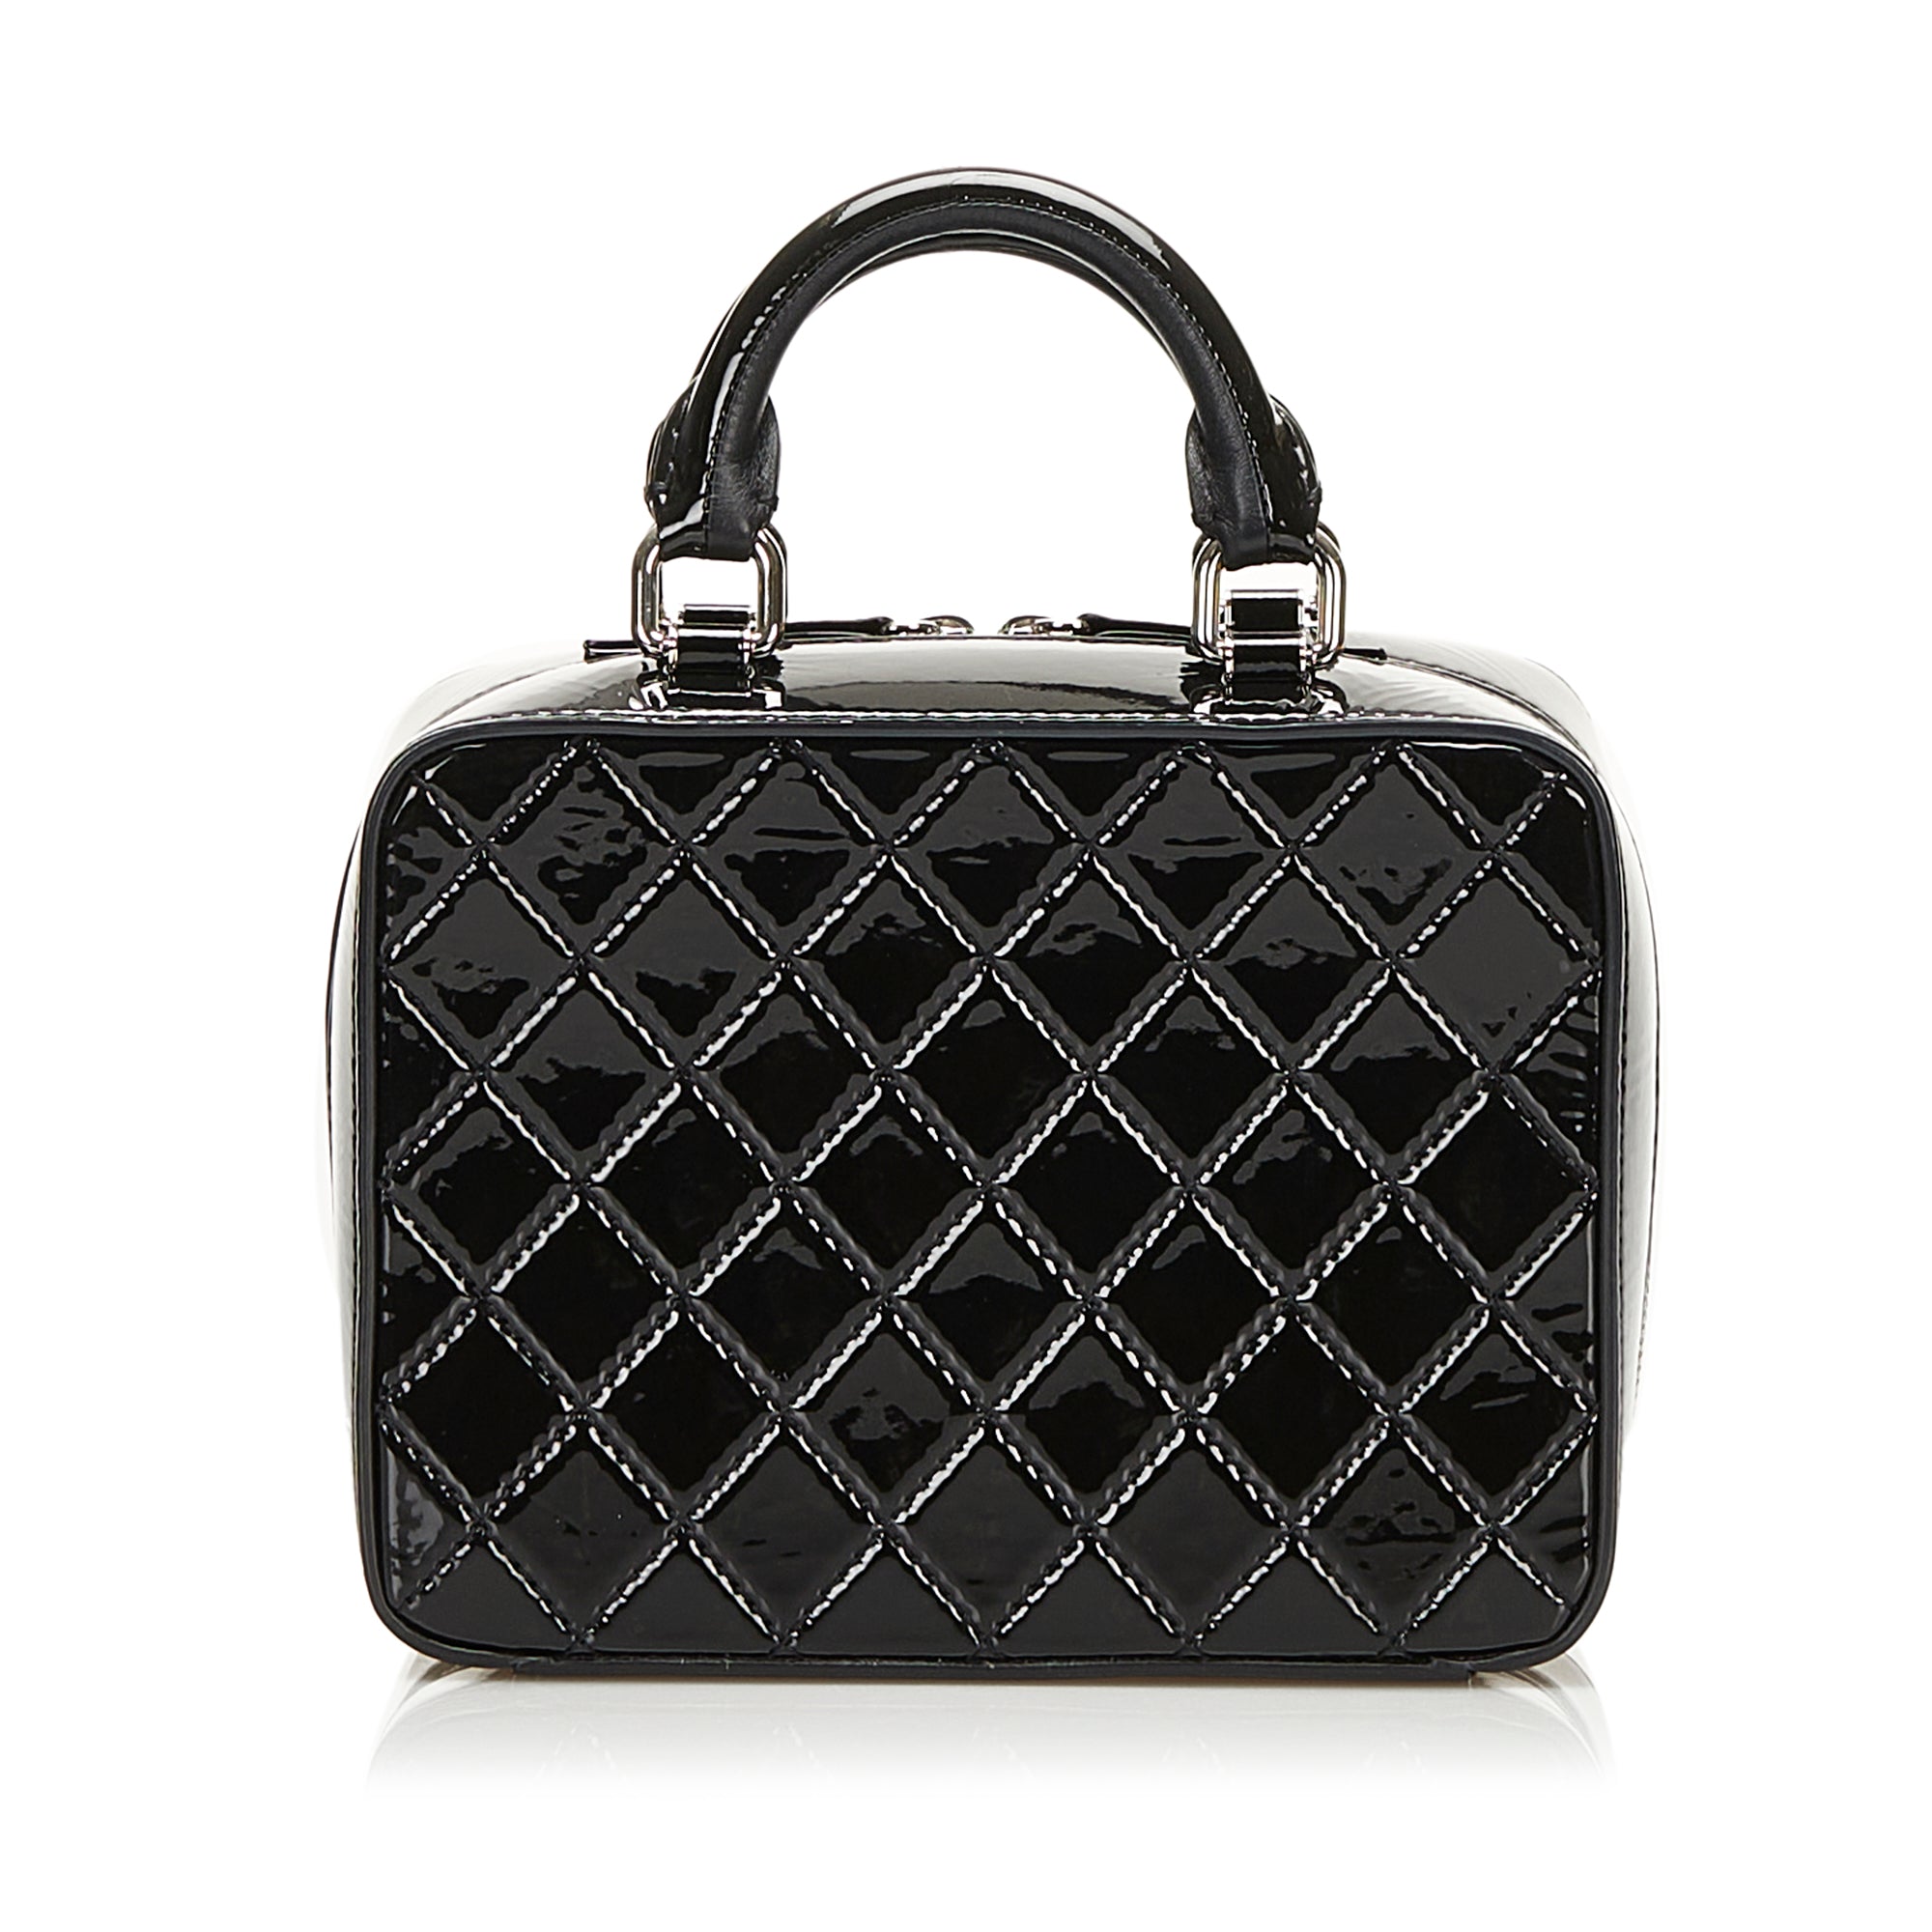 Black Chanel 2000s Vanity Case Patent Leather Satchel, GottliebpaludanShops Revival